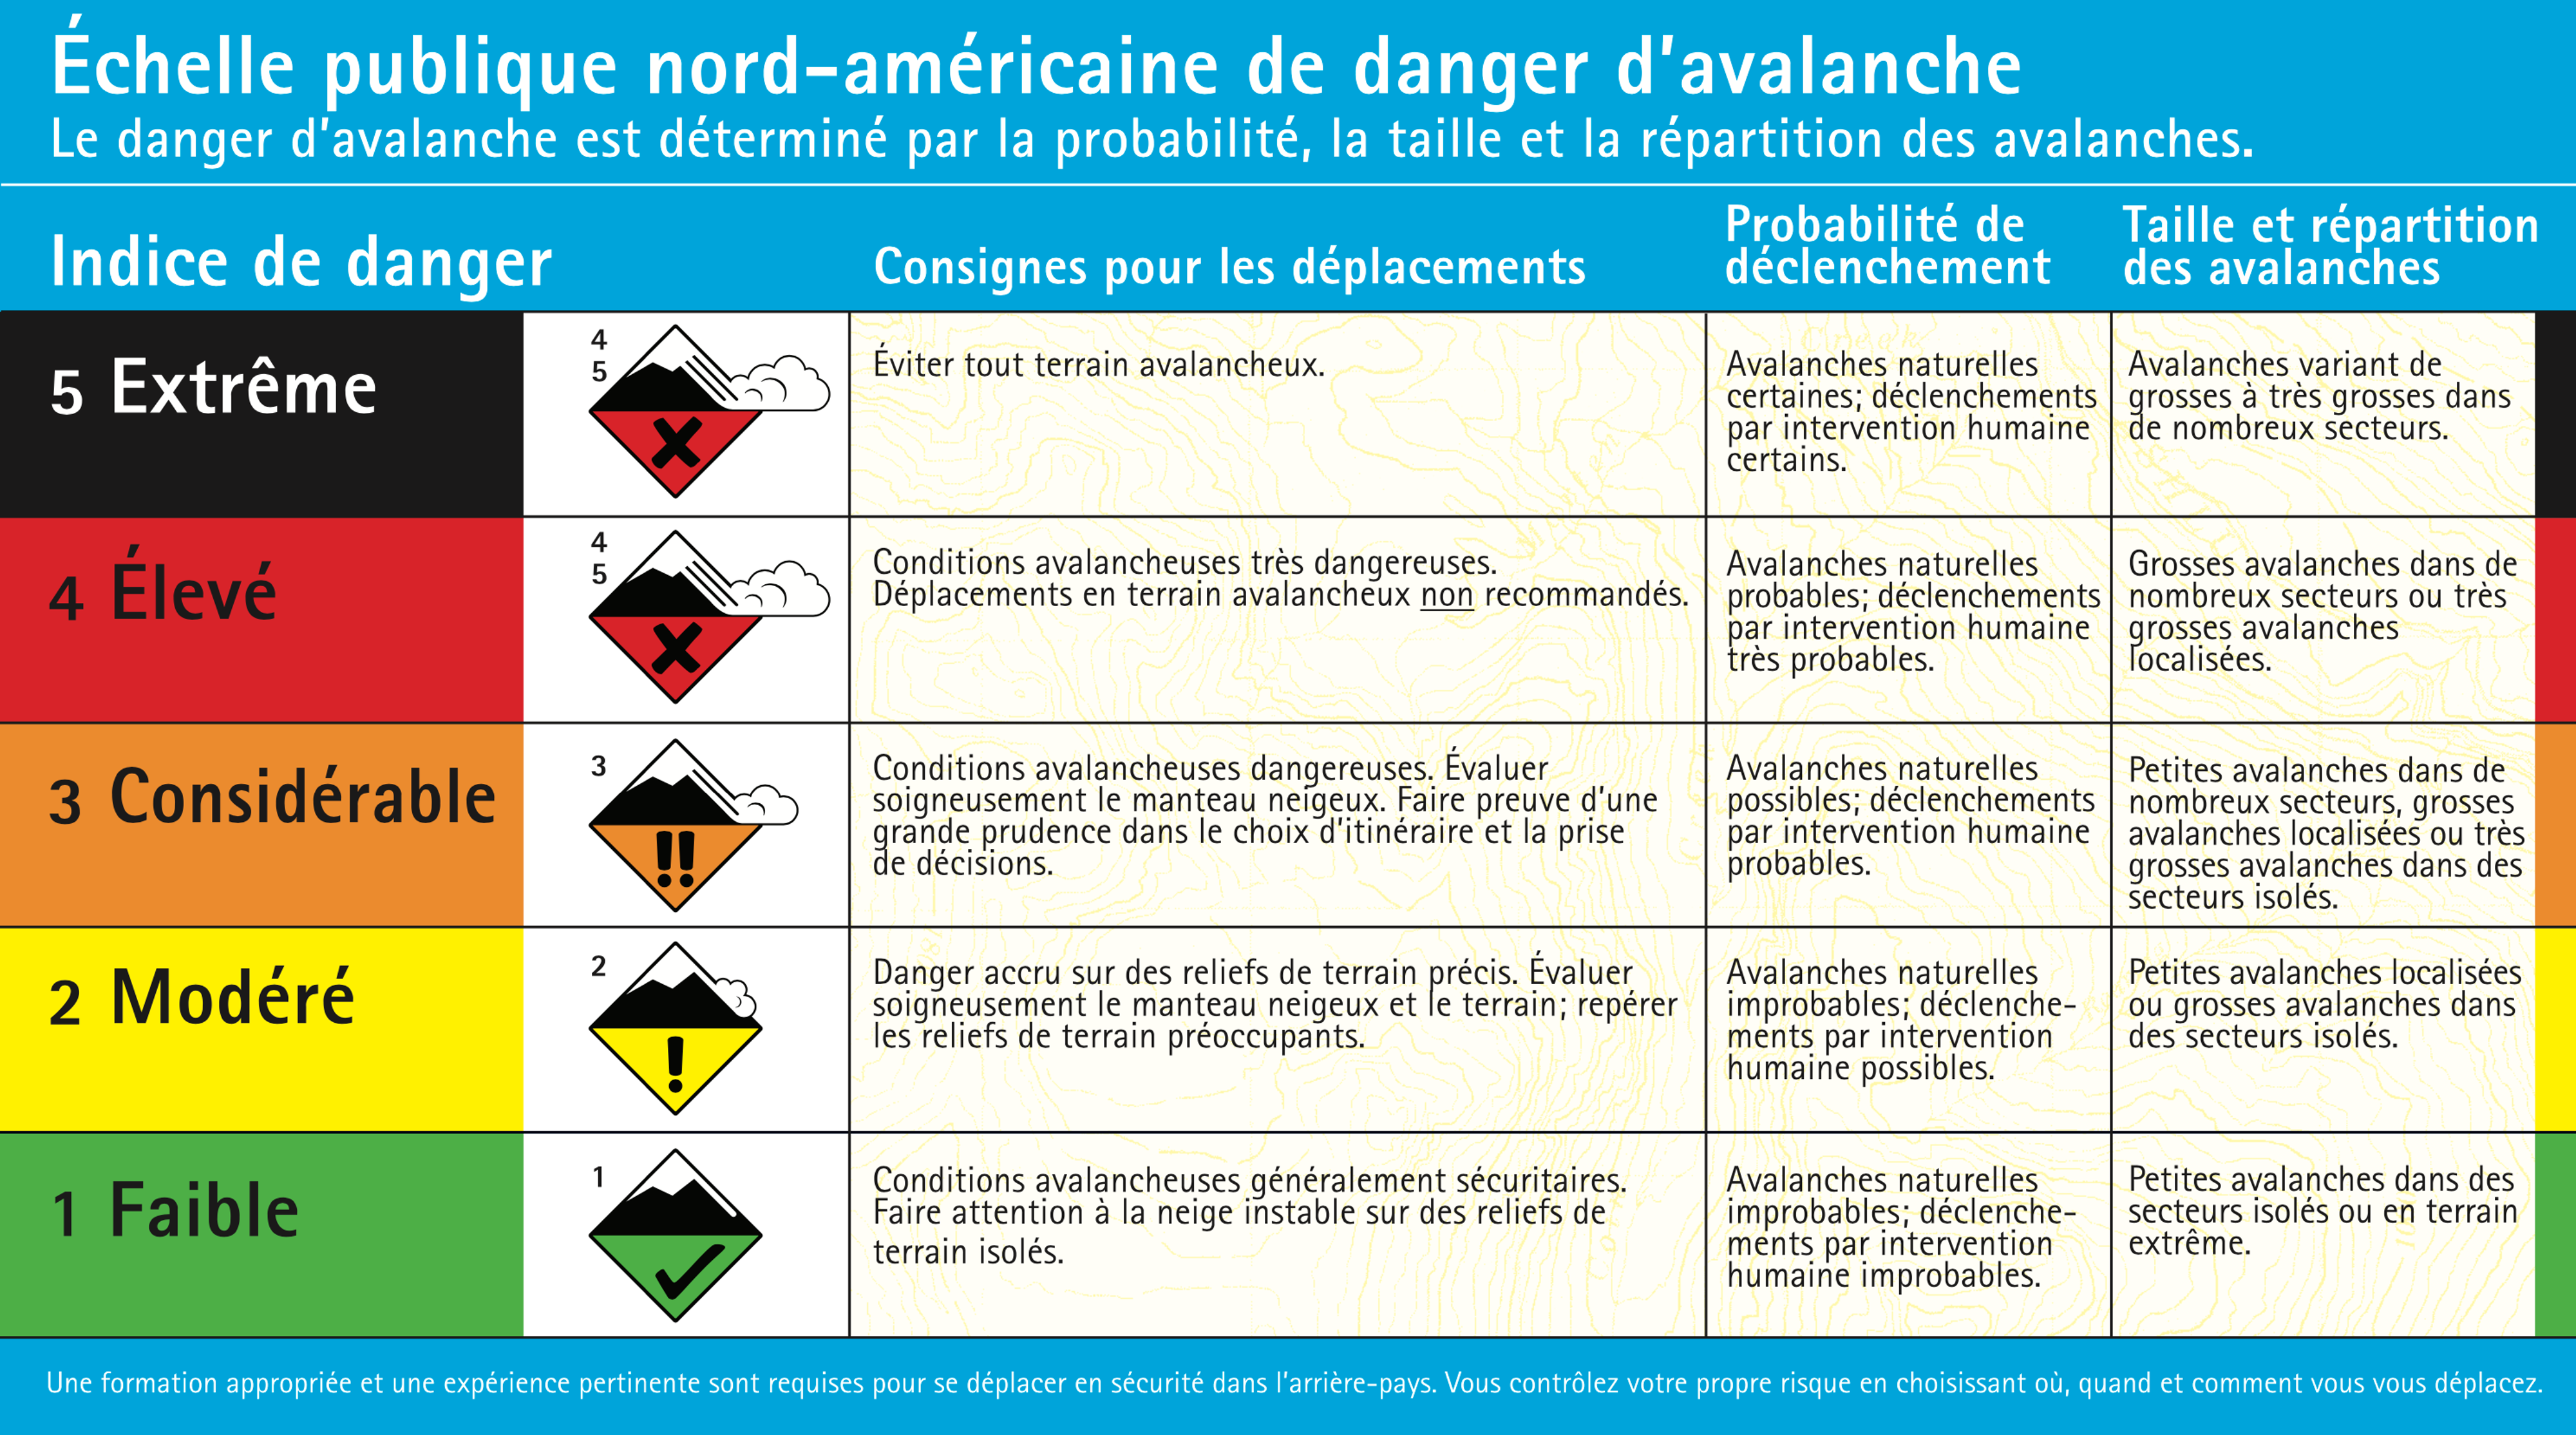 The North American Public Avalanche Danger Scale